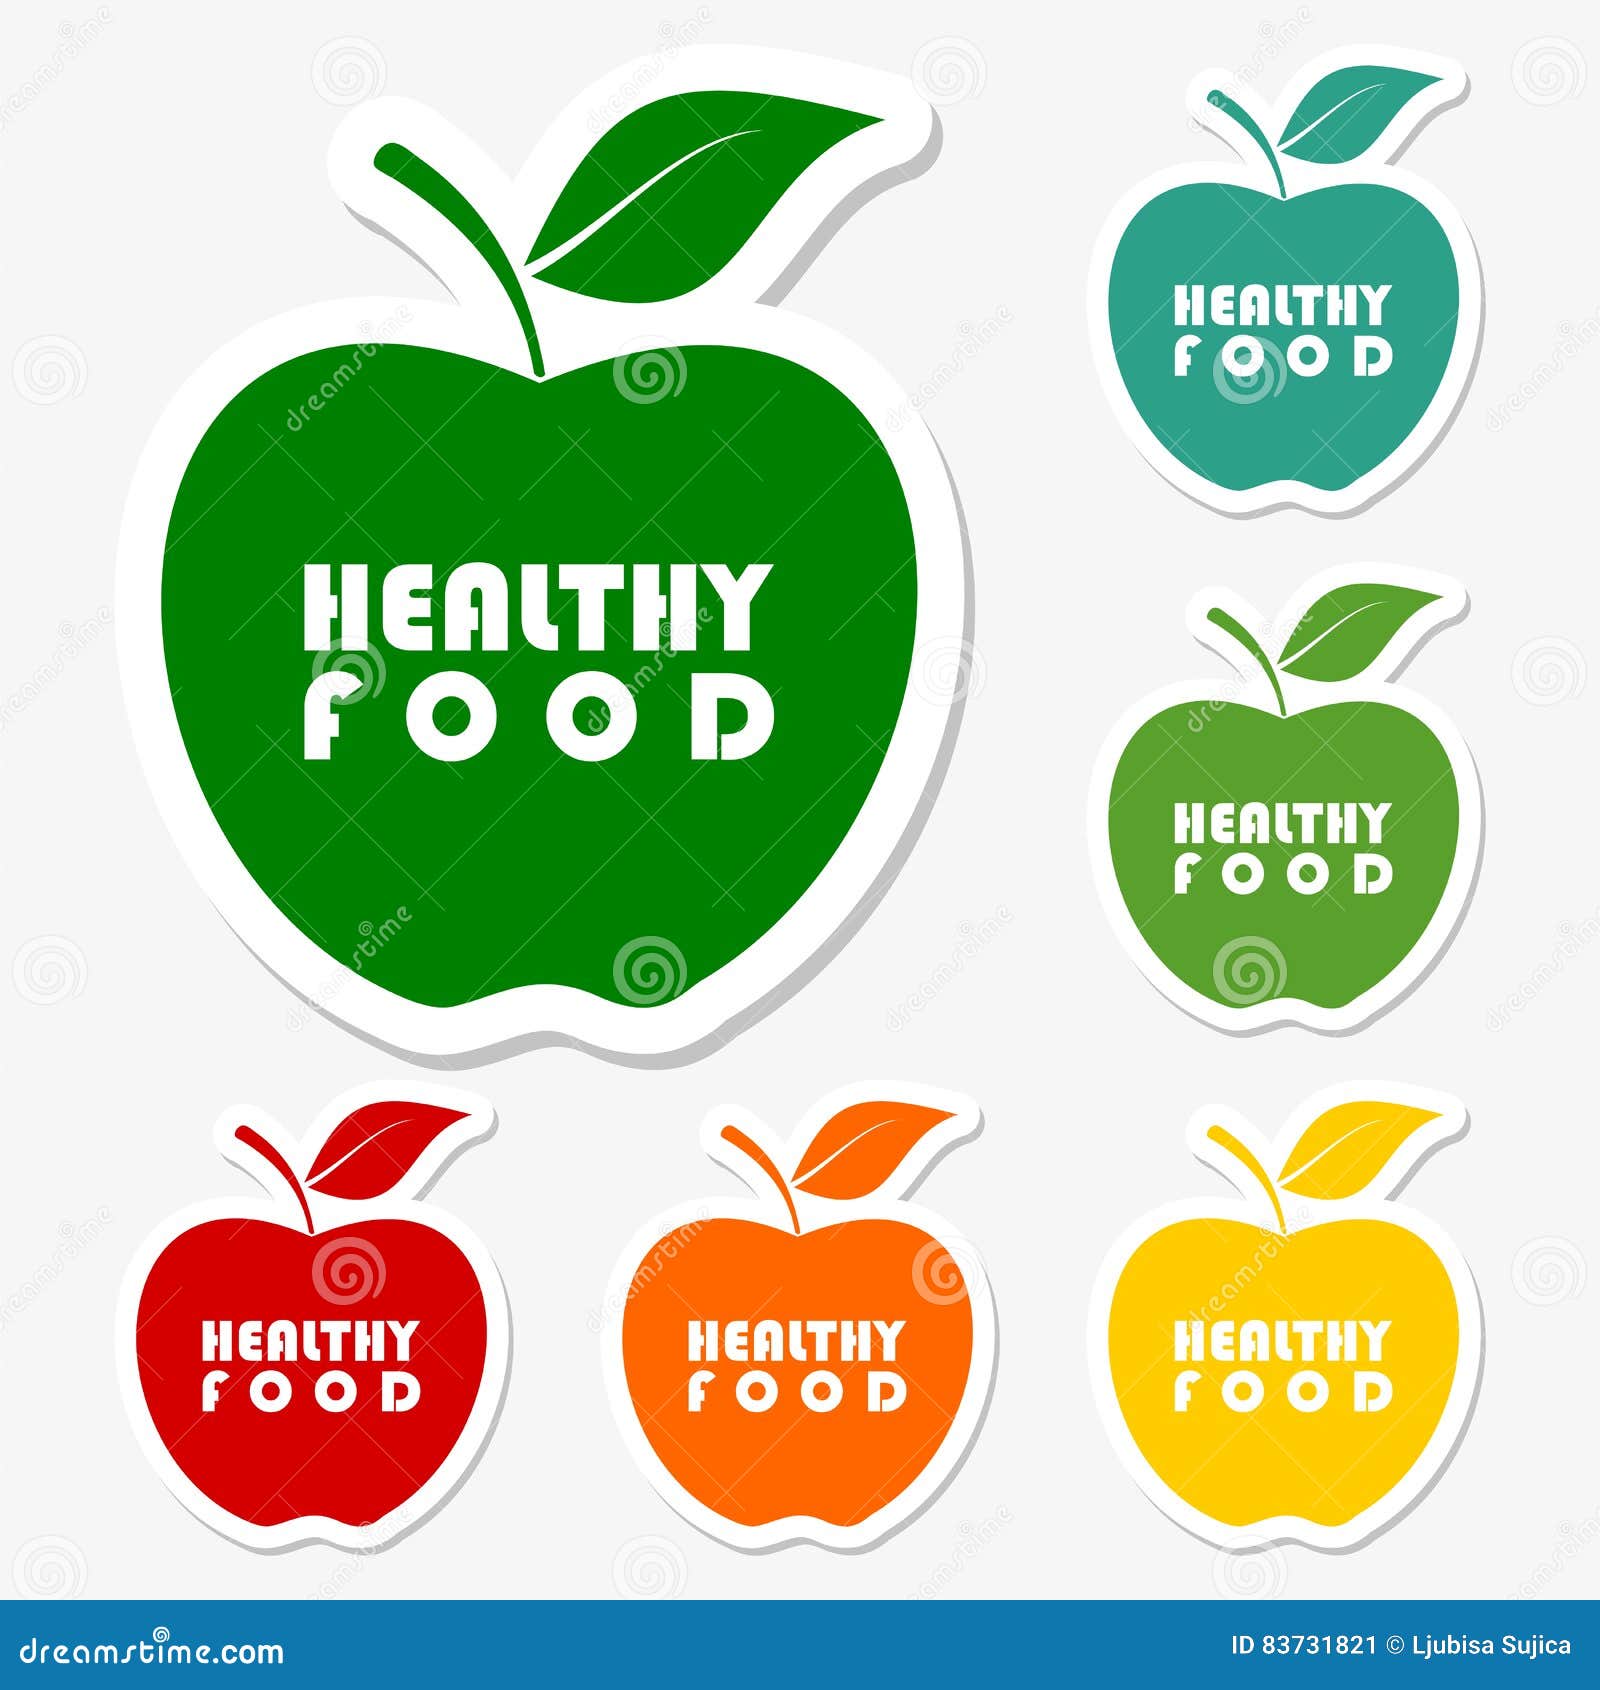 Healthy food design stock vector. Illustration of badge - 83731821